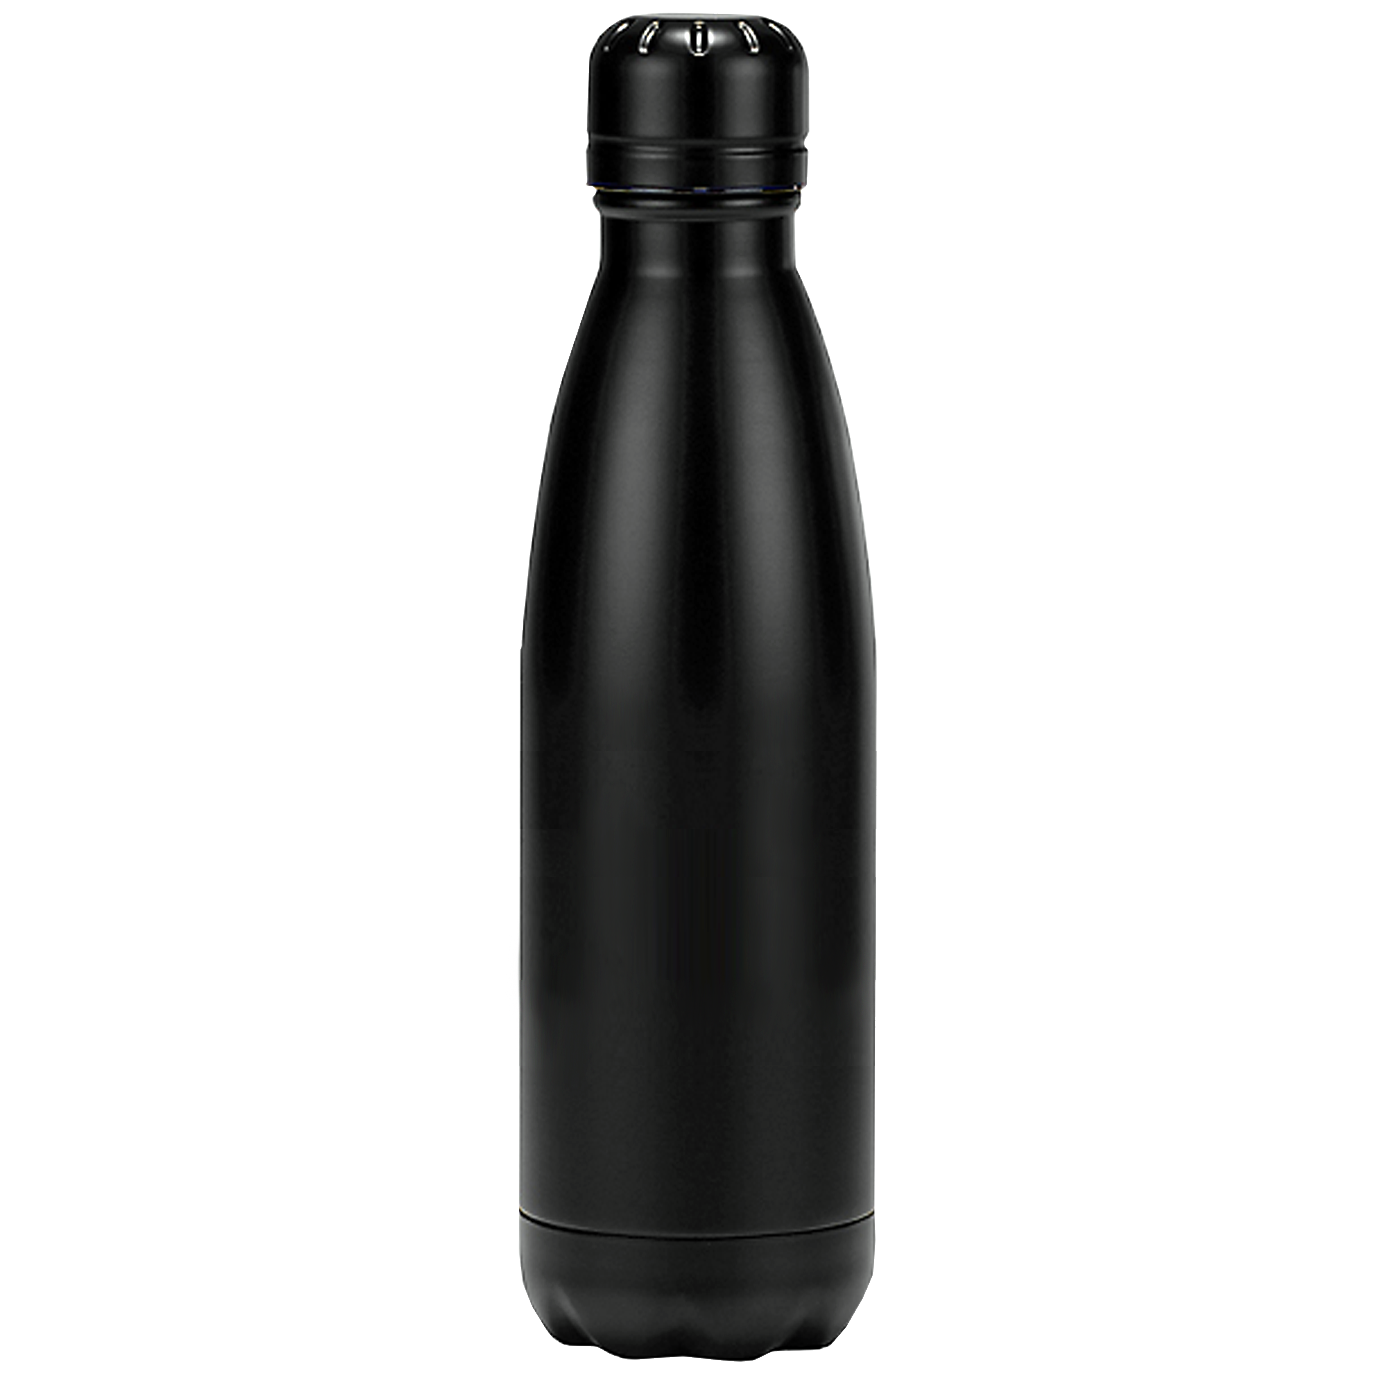 Voyager 17oz stainless steel bottle - Black